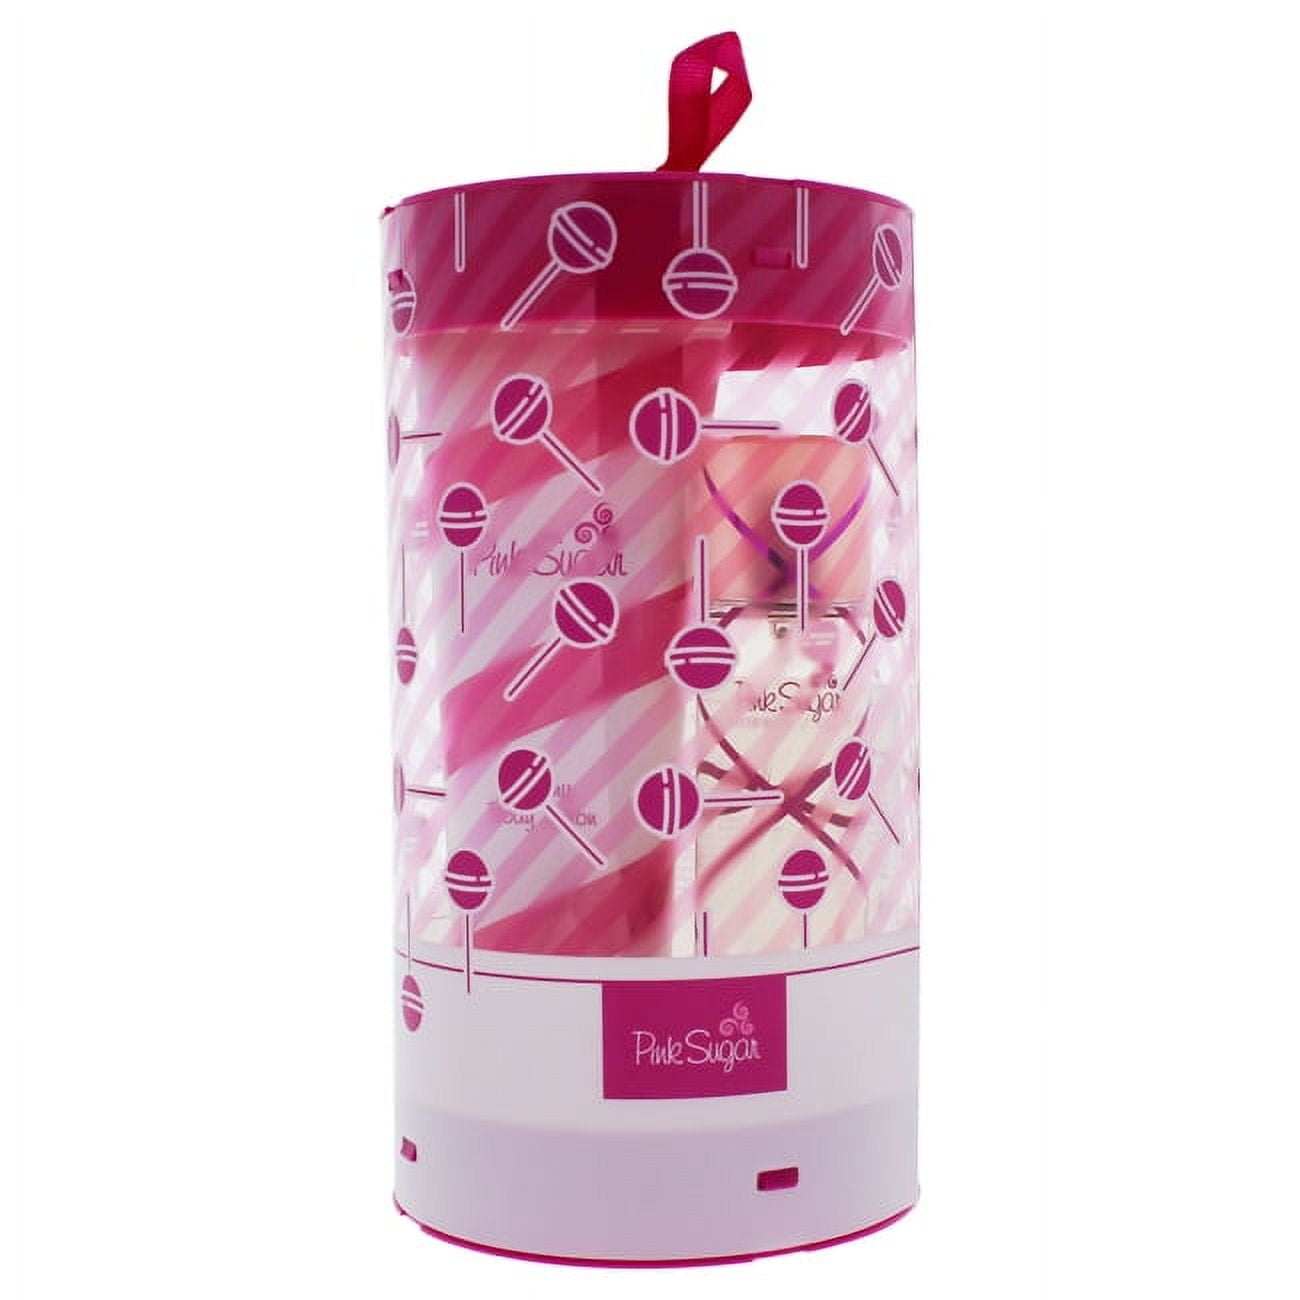 Pink Sugar by Aquolina Eau de Toilette Spray 1.7 oz